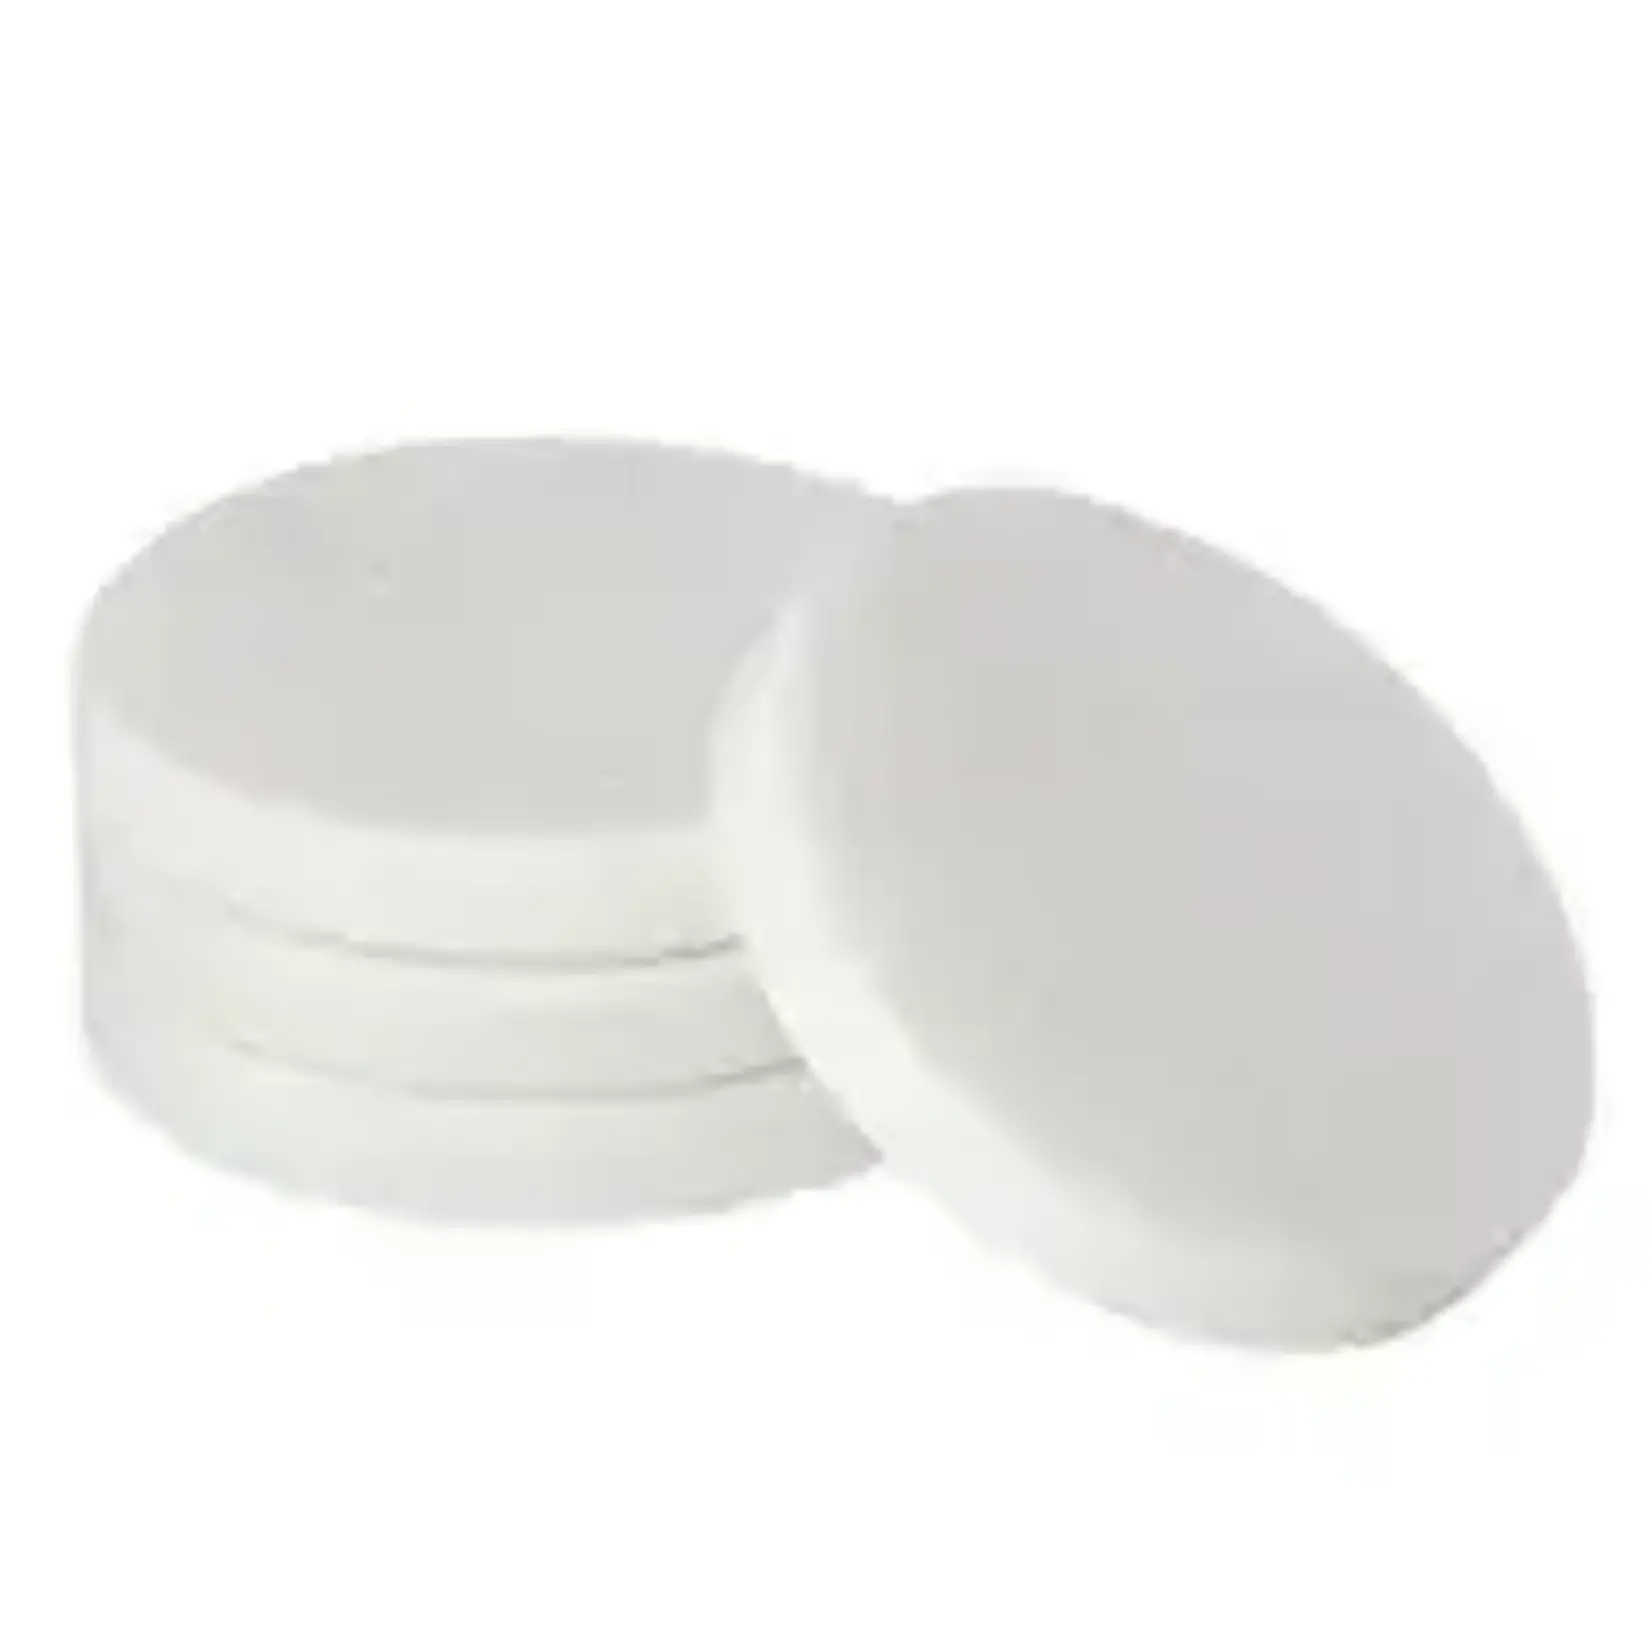 Marble Coasters Round - Set of 4 - White